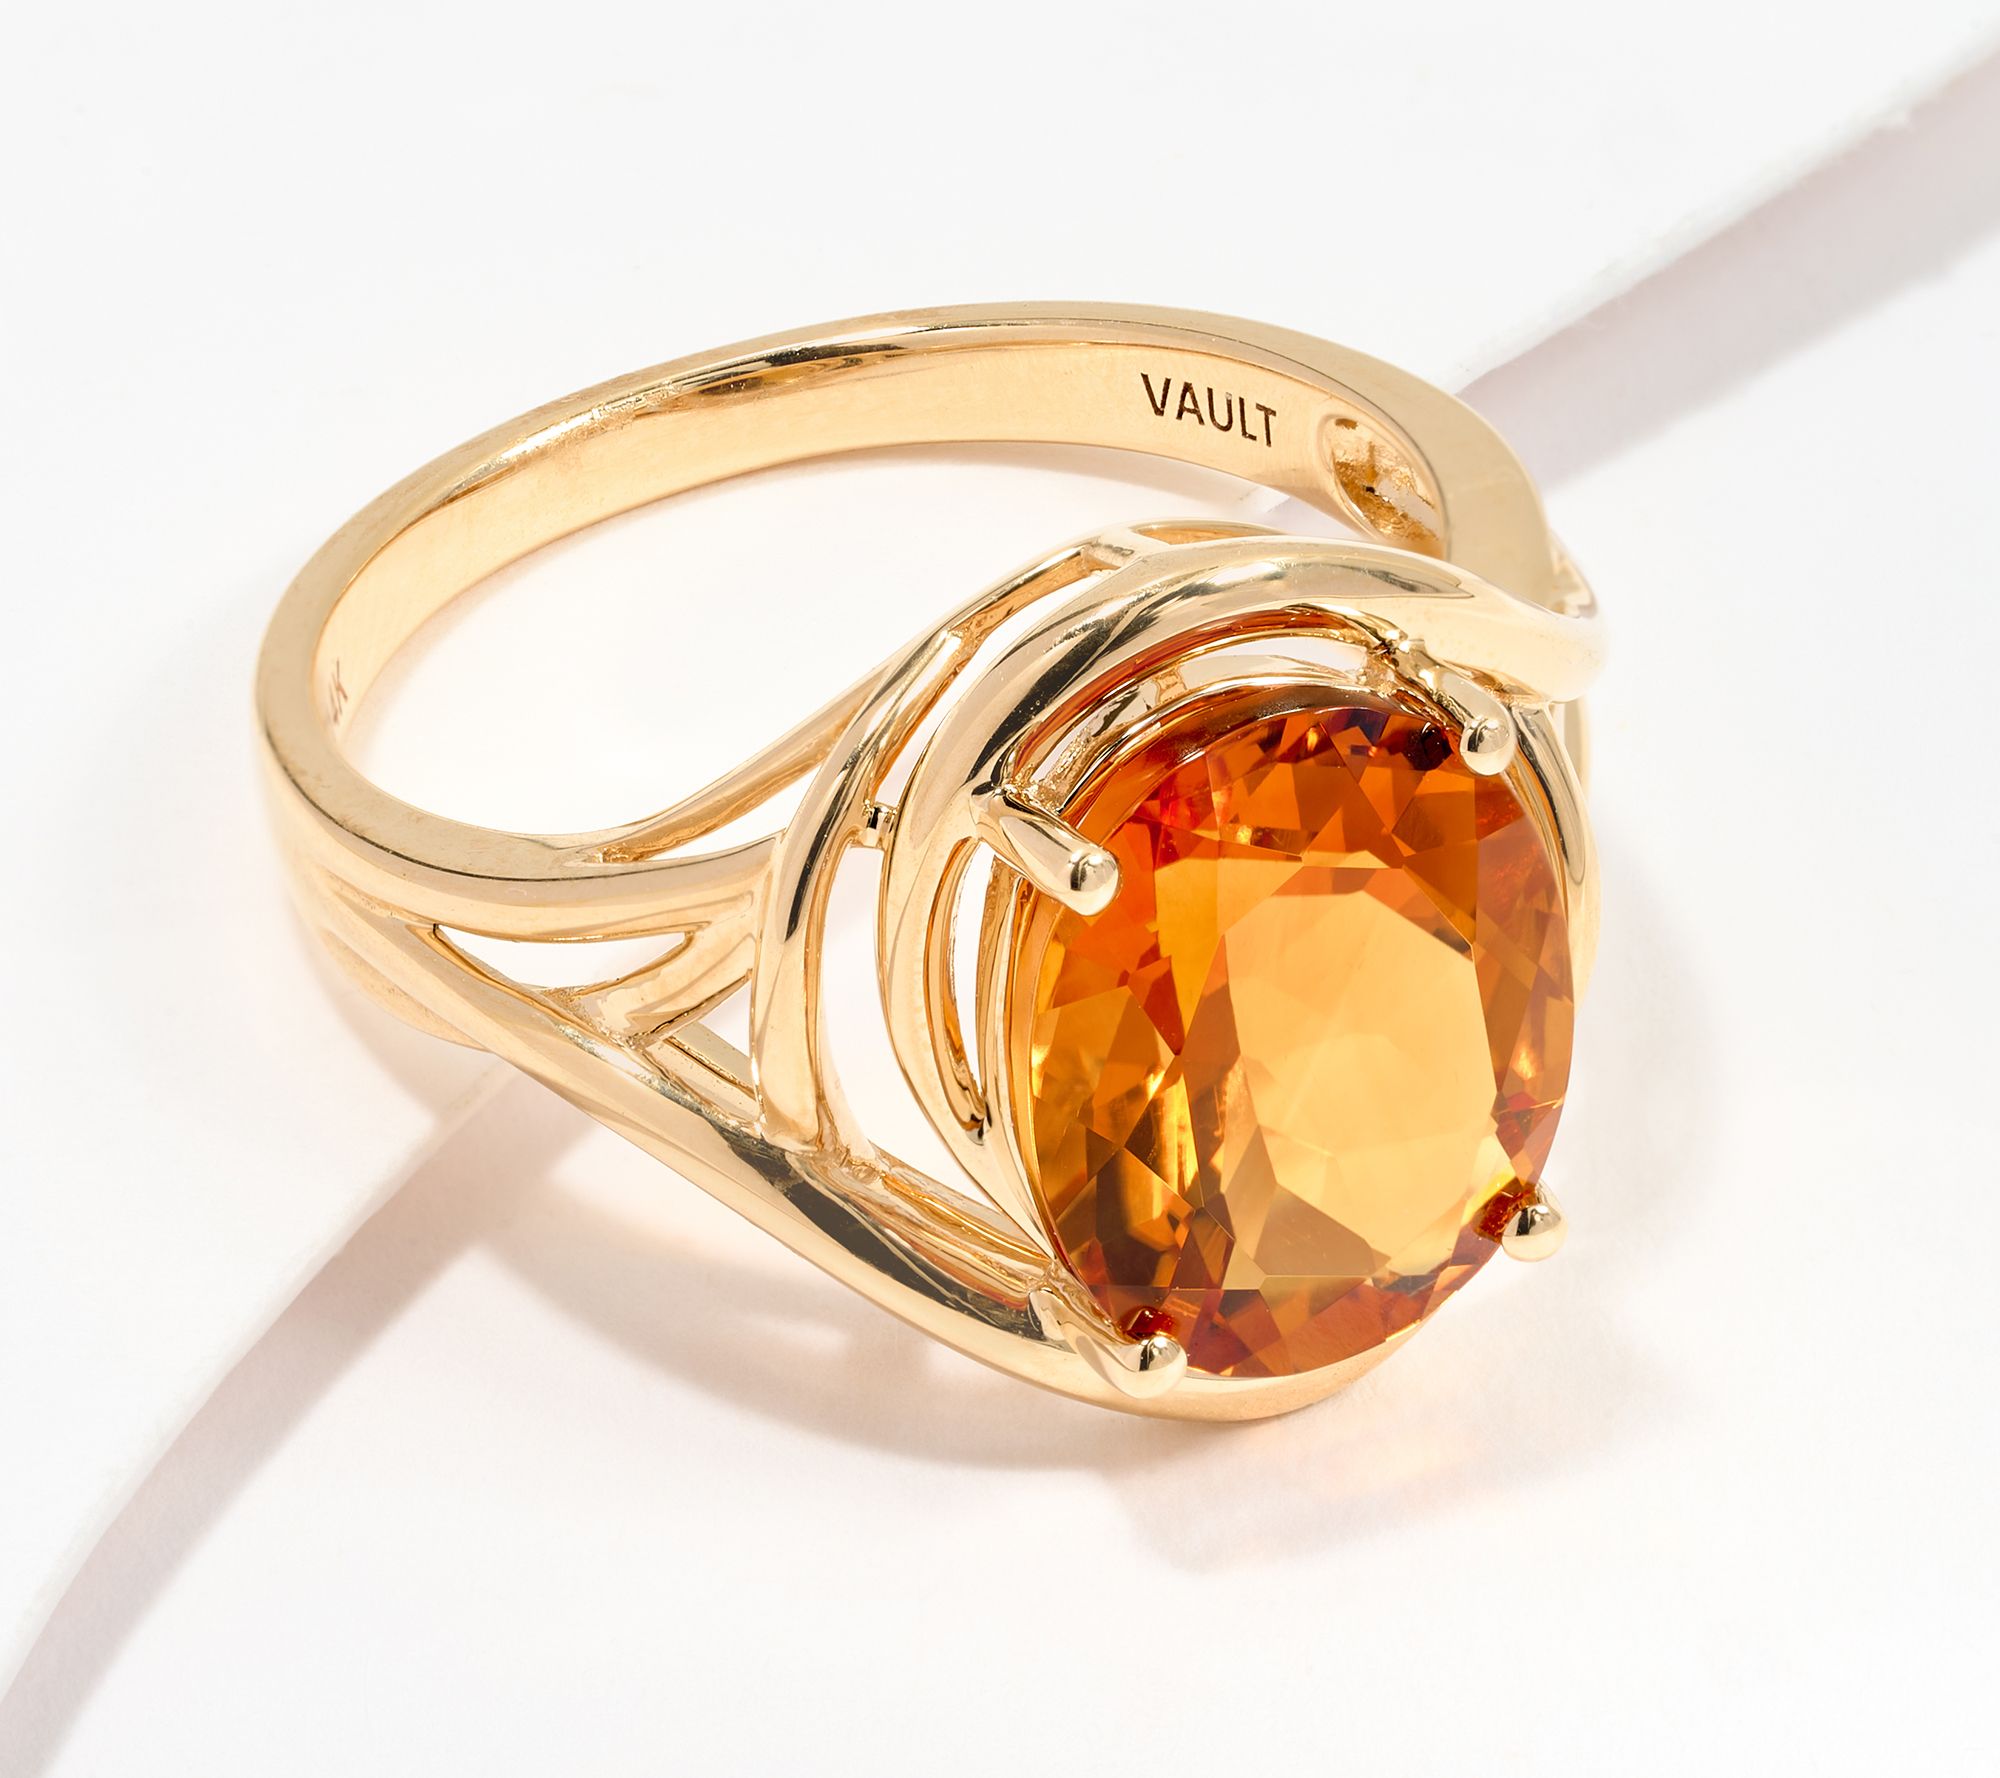 Vault Discoveries Oval Cut Serra Citrine Ring, 14k Gold